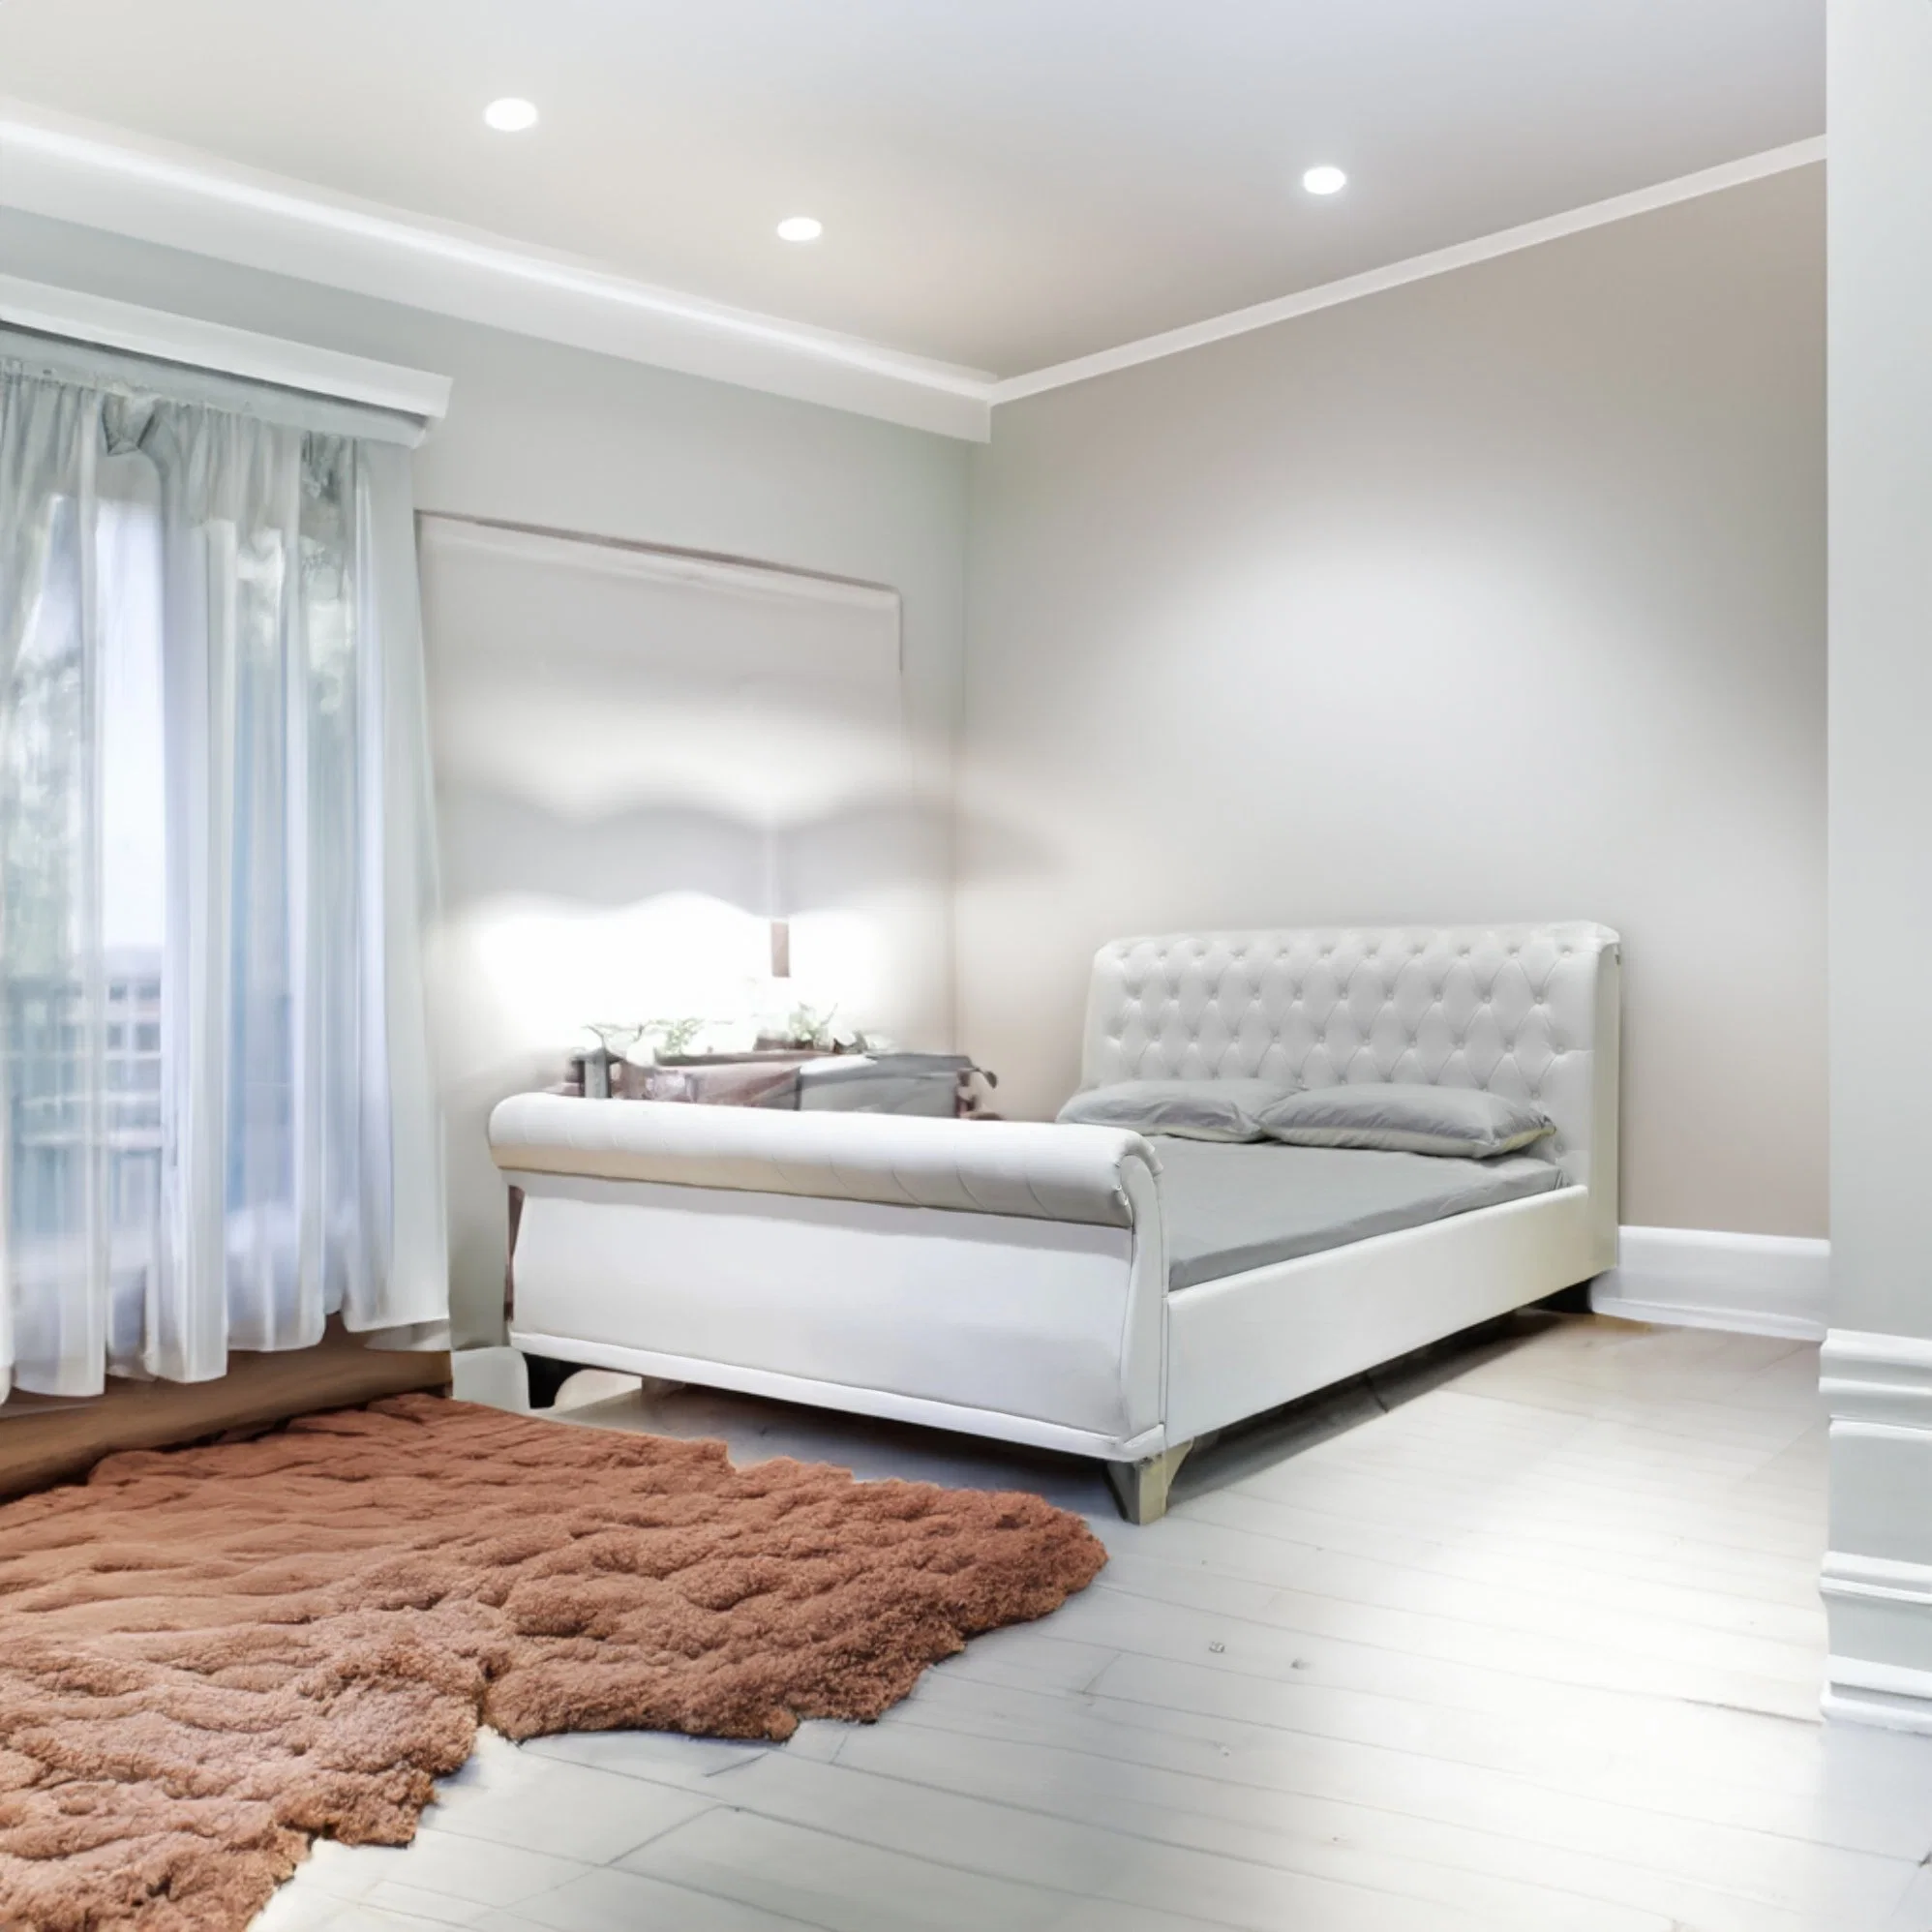 Hot Double American Huayang Customized Bedroom Design Bed Living Room Furniture

Meubles de chambre à coucher personnalisés Huayang américains doubles chauds